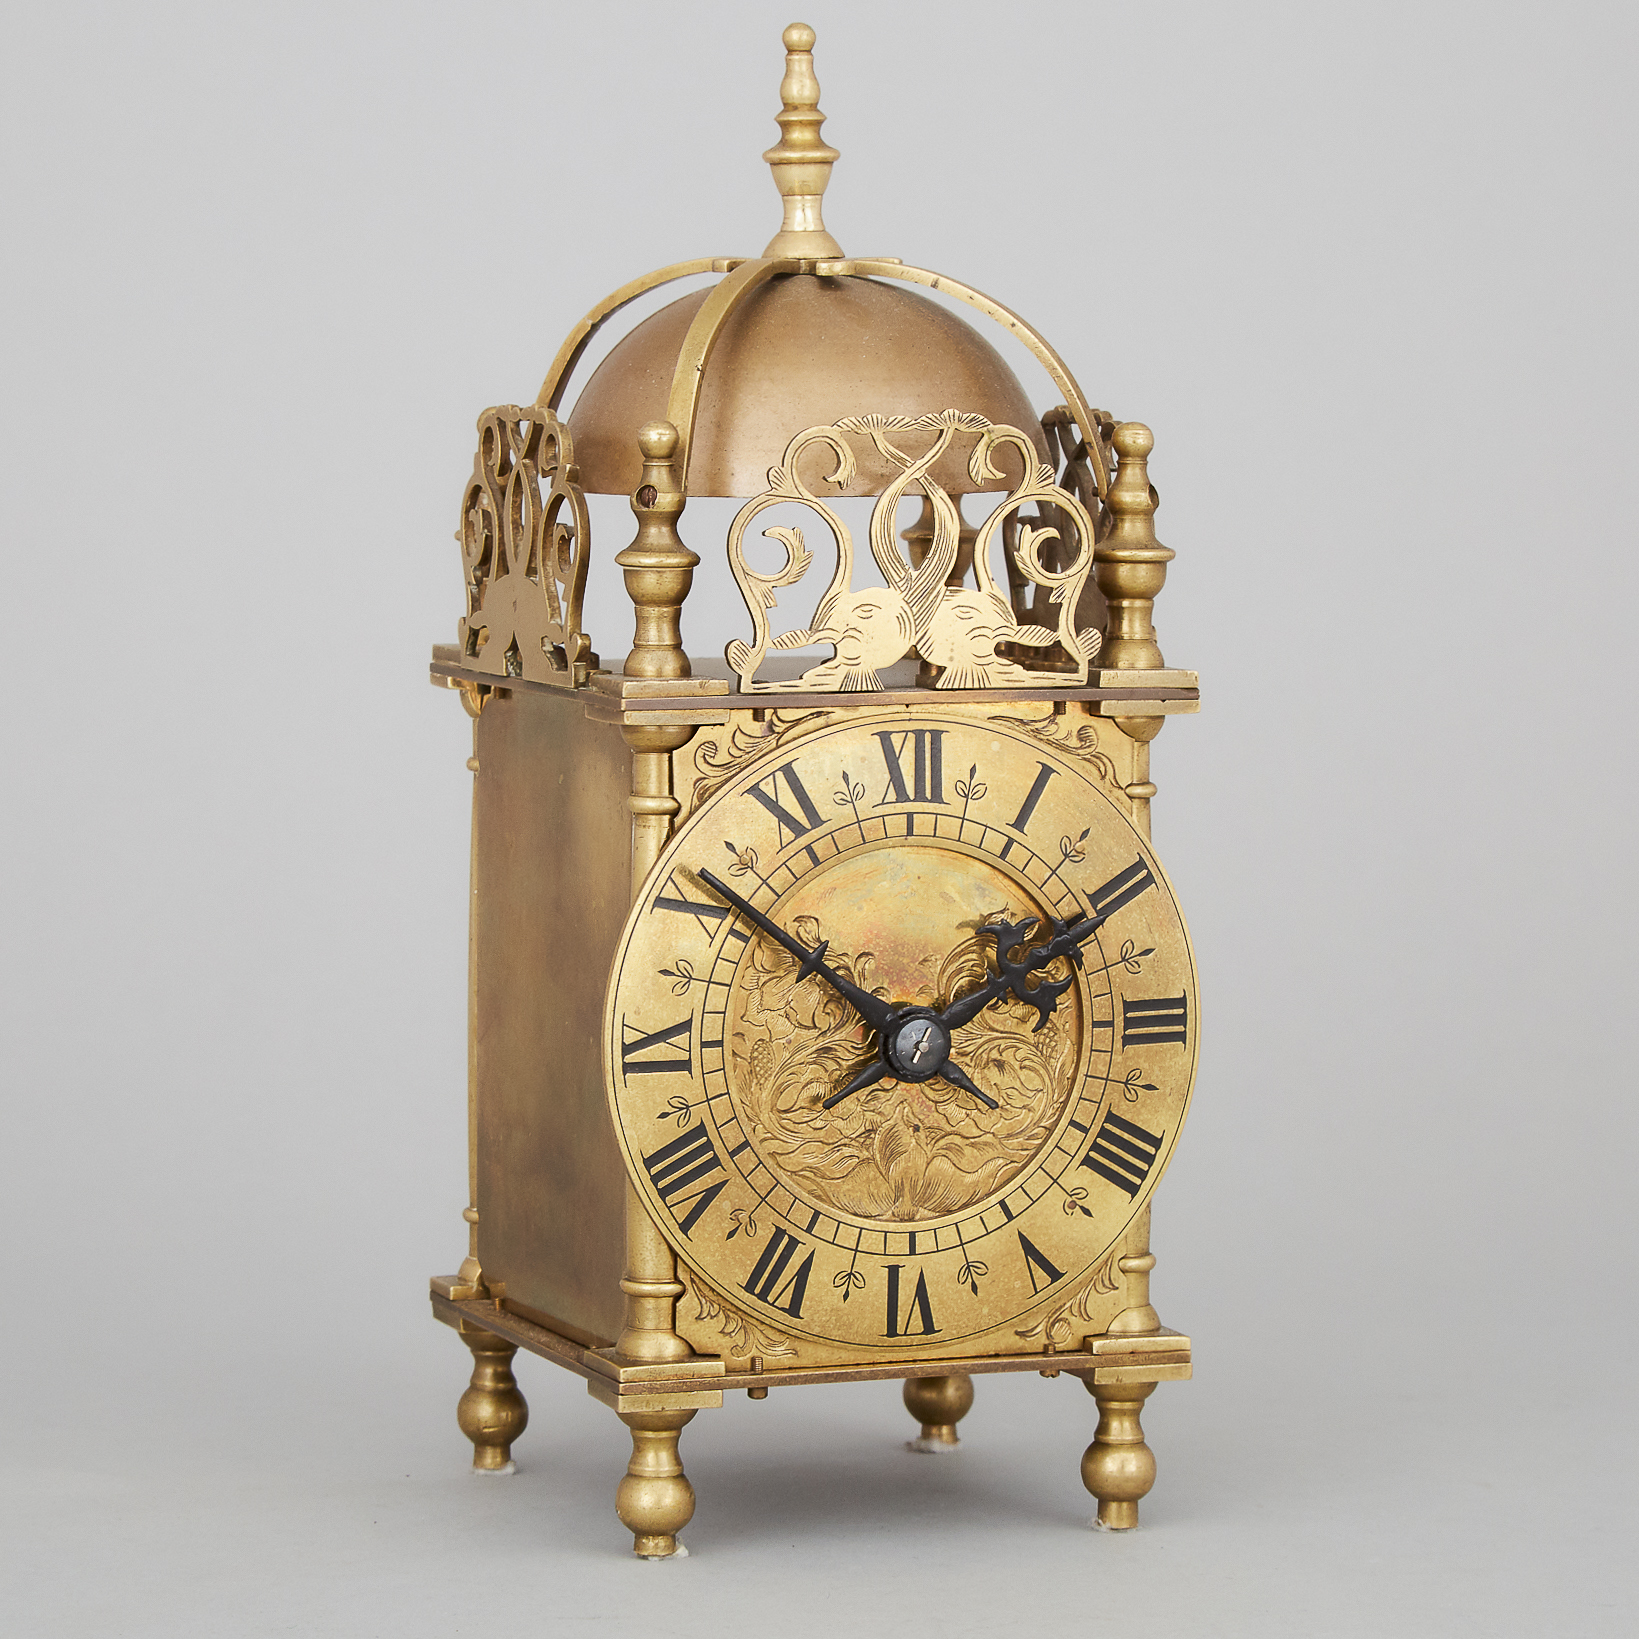 Working Model of a Brass Lantern Clock, early 20th century